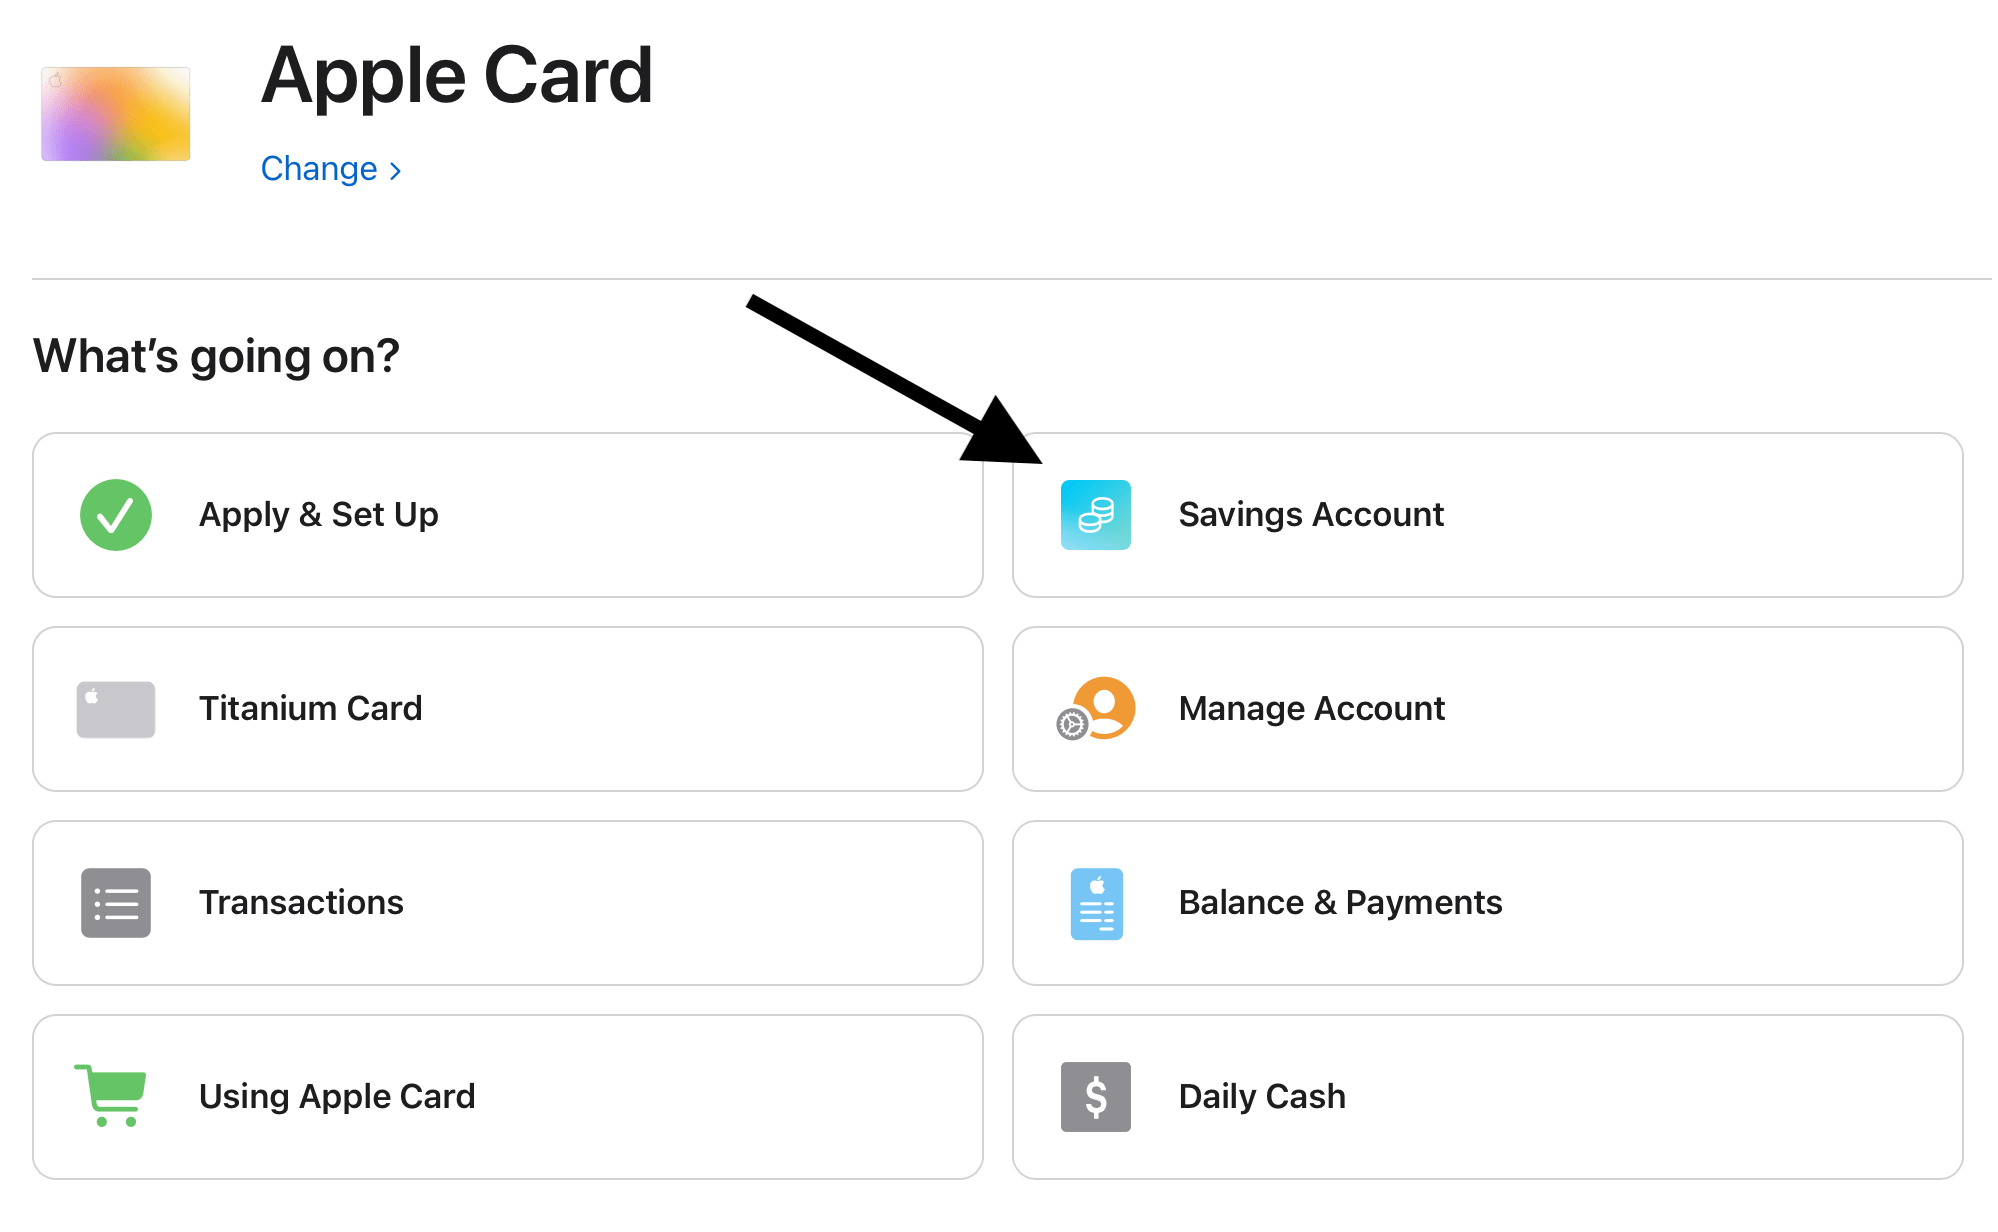 Apple support website Savings Account option